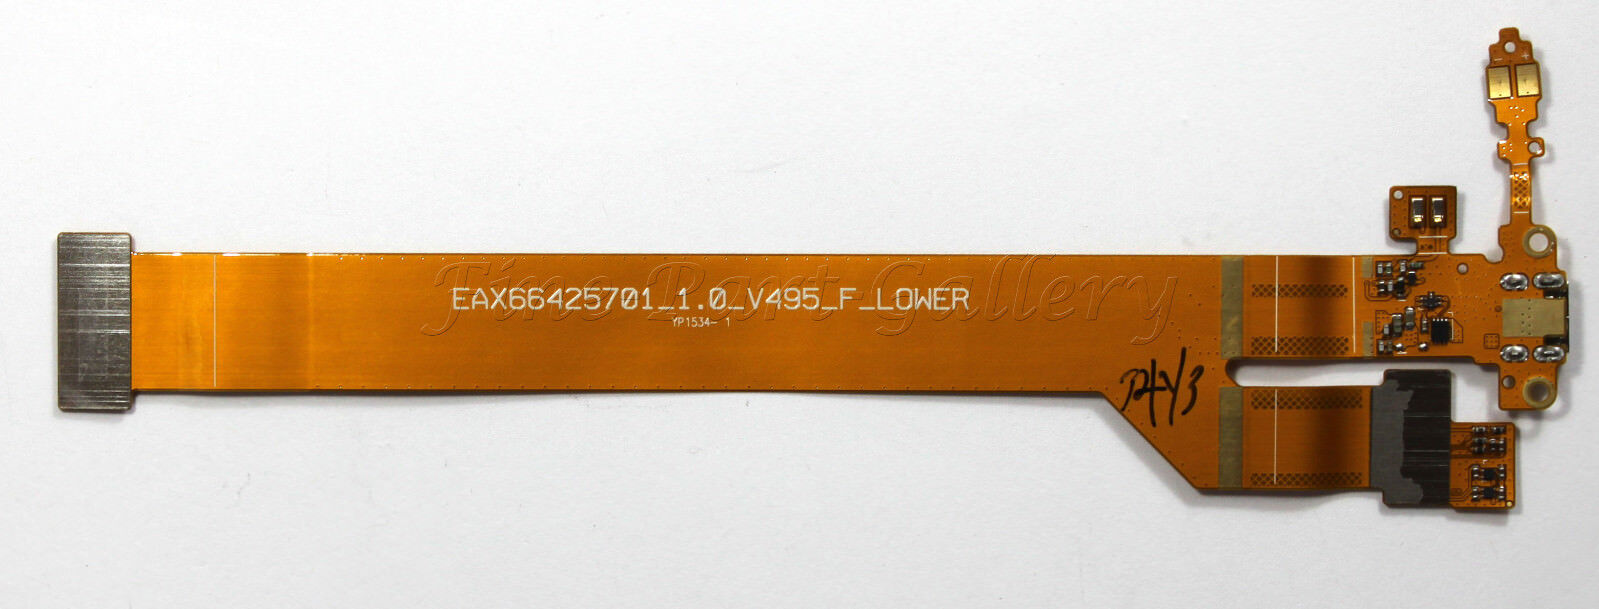 OEM LG G PAD II 8.0 V498 REPLACEMENT USB CHARGING PORT CHARGE PLUG